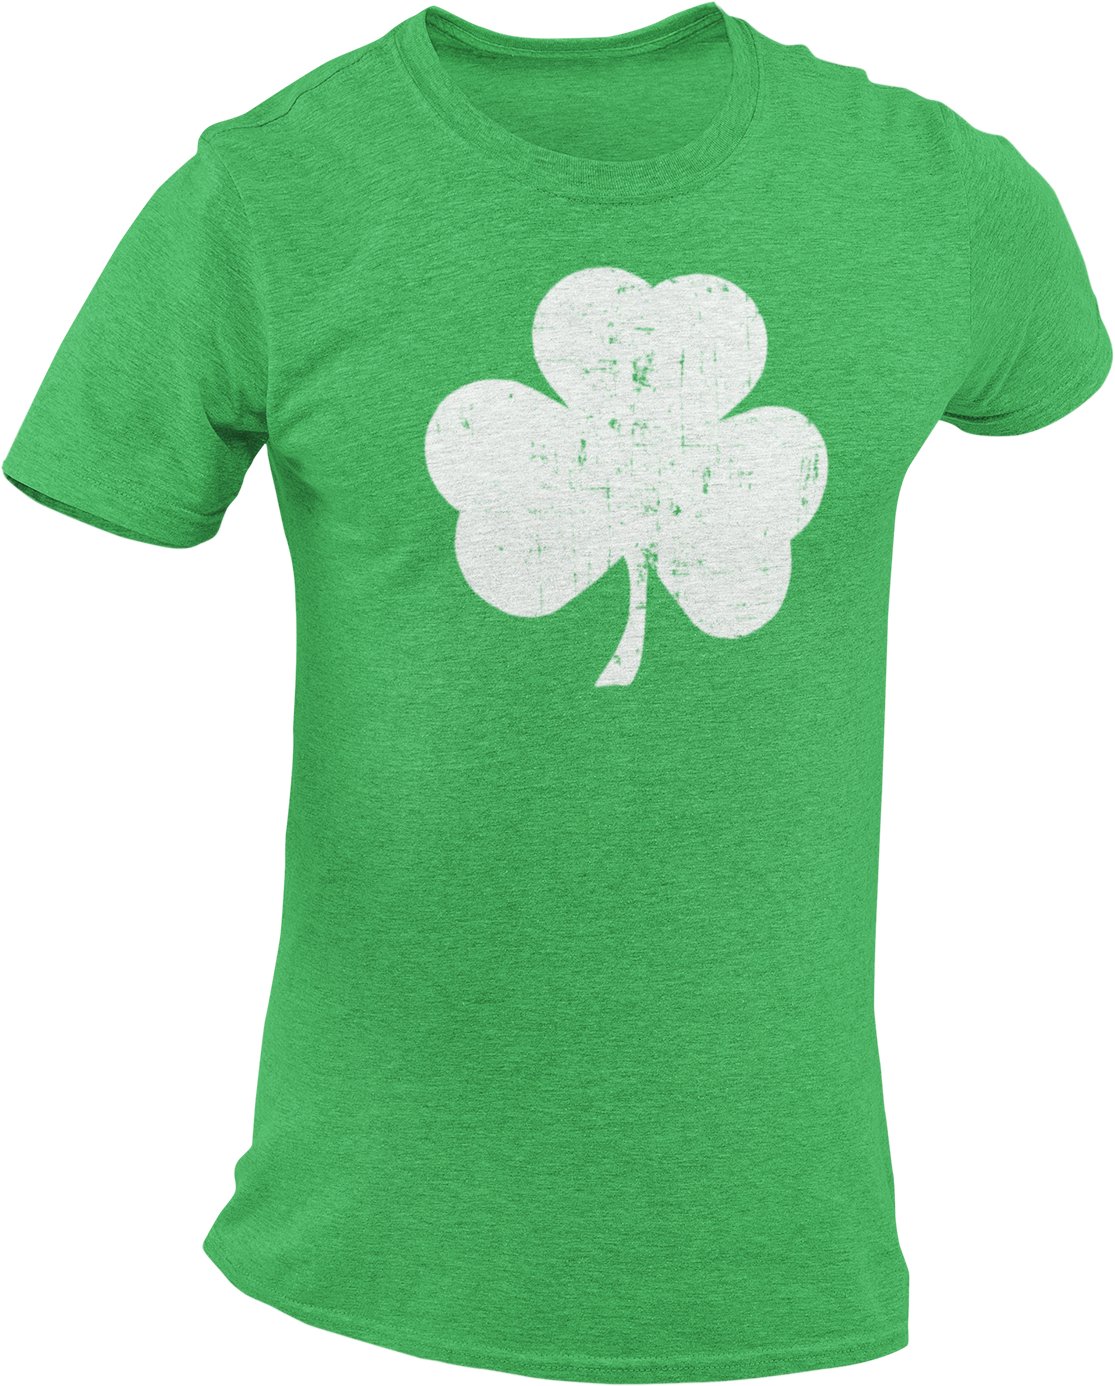 USA Screen Printed Charcoal Irish Distressed Shamrock T-Shirt St Patricks Day Mens Ireland